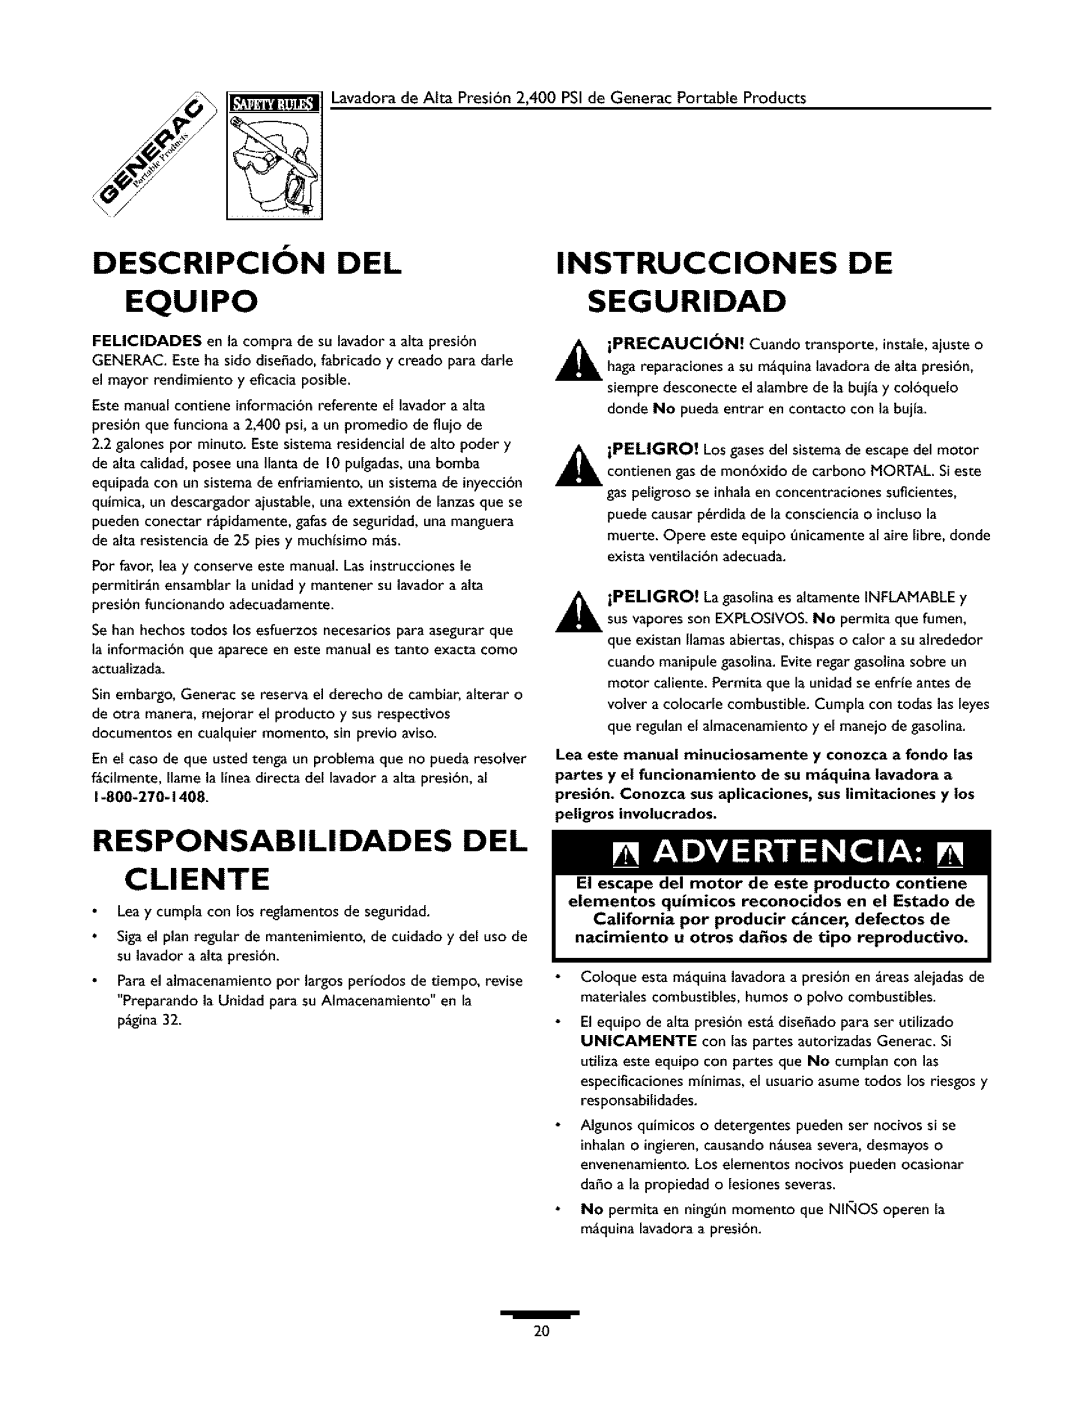 Generac 1537-0 owner manual Instrucciones De Seguridad, DESCRIPCION DEL EQUlPO, Responsabilidades Del Cliente 